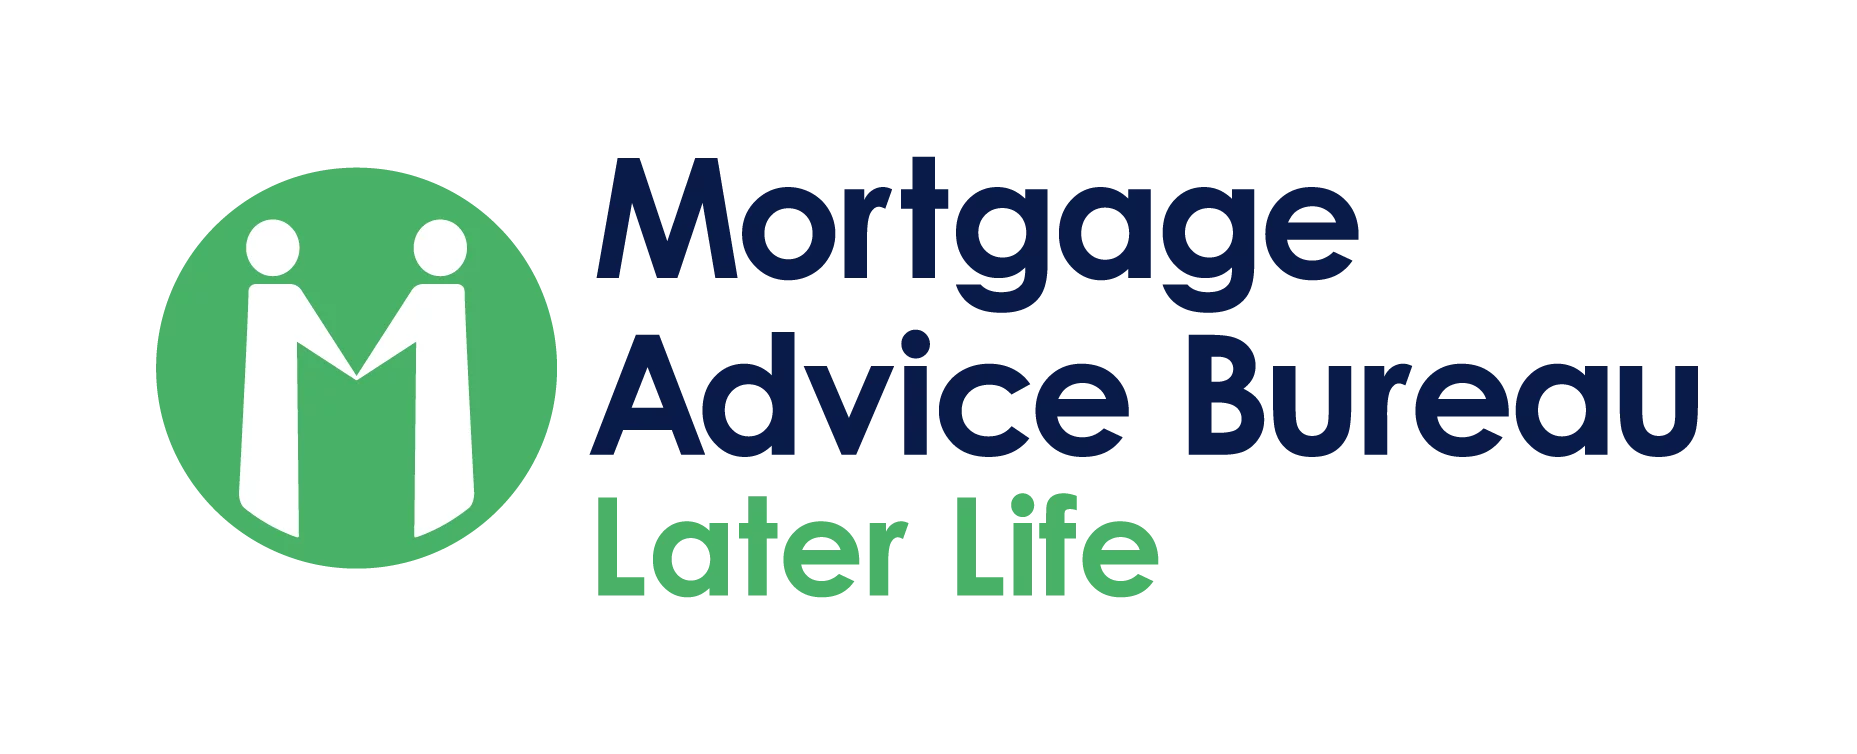 Mortgage Advice Bureau - York Main Logo